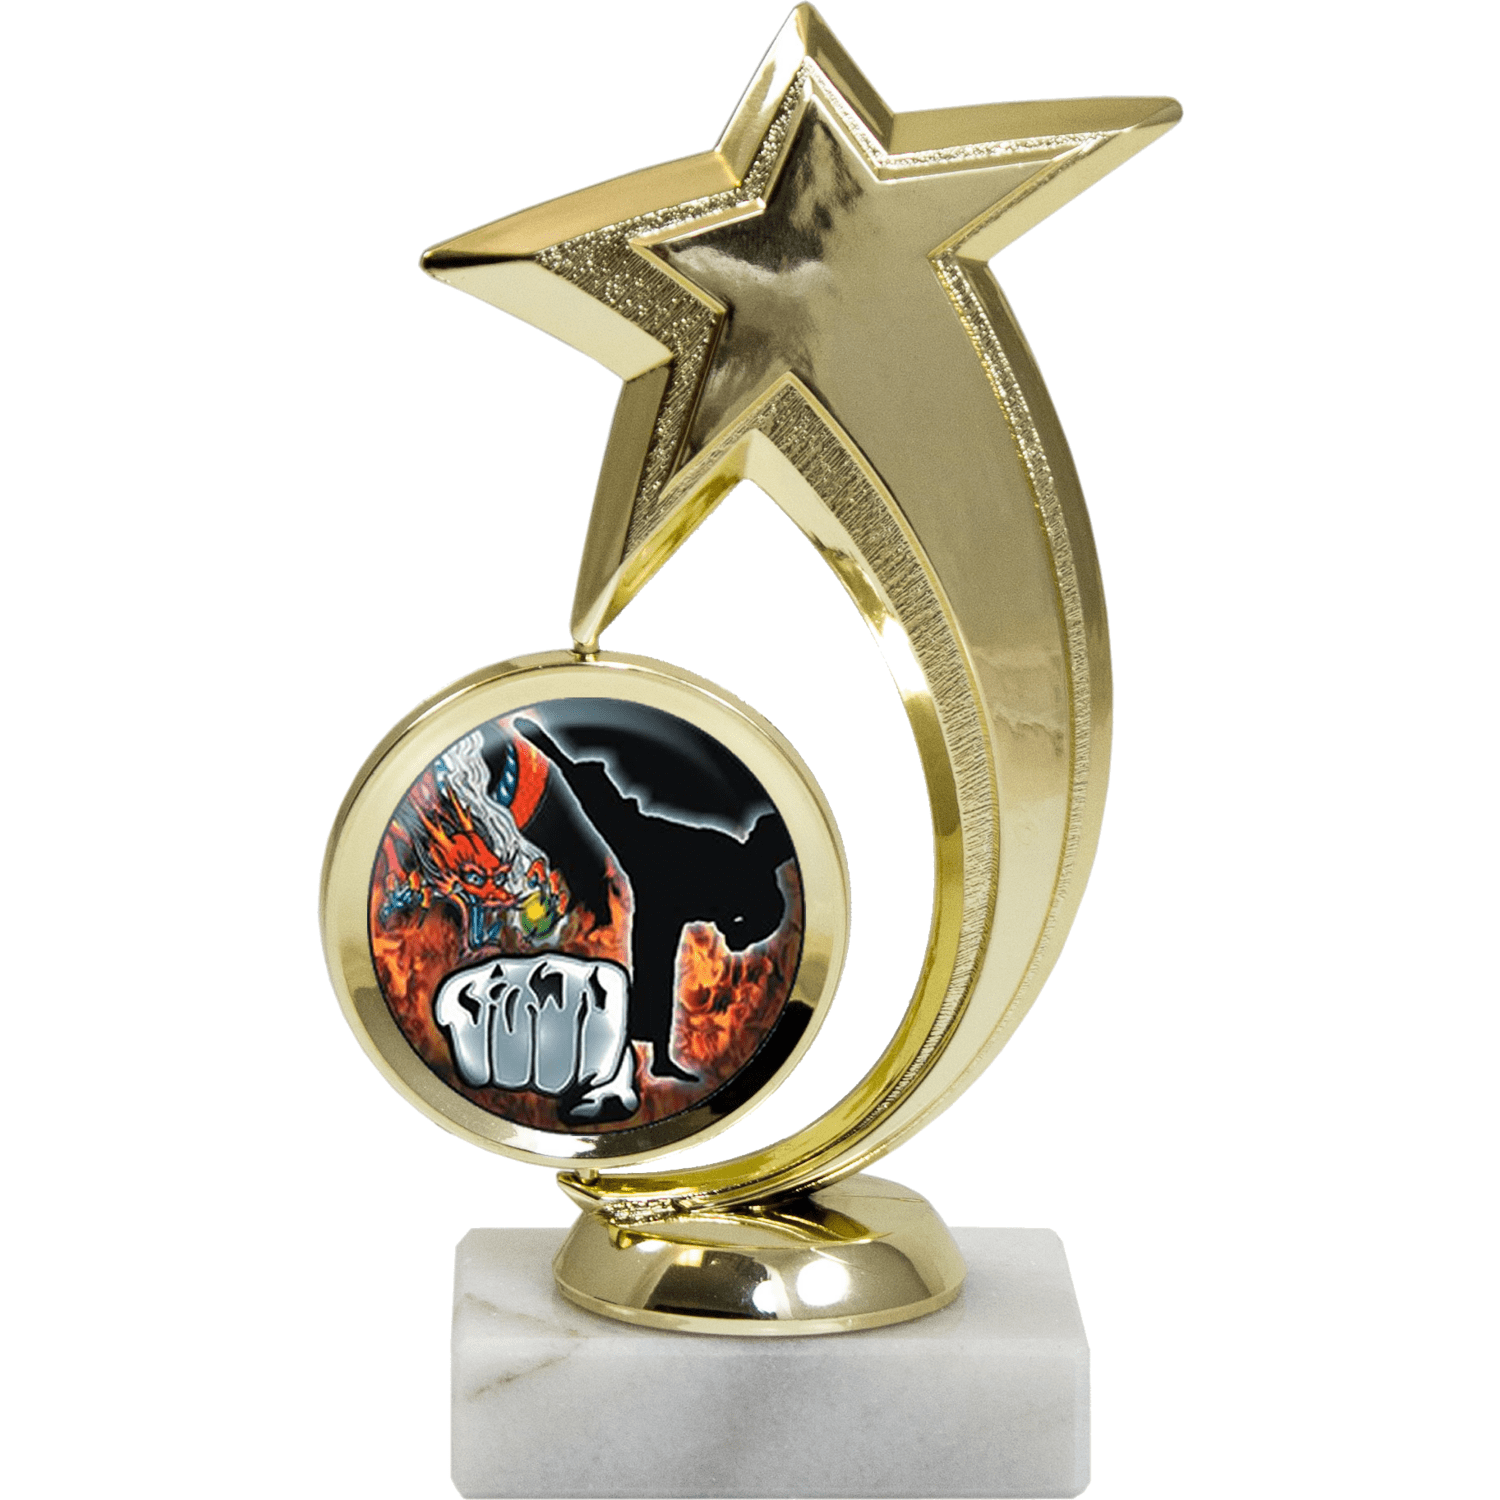 Gold Shooting Star Award With Insert | Alliance Awards LLC.